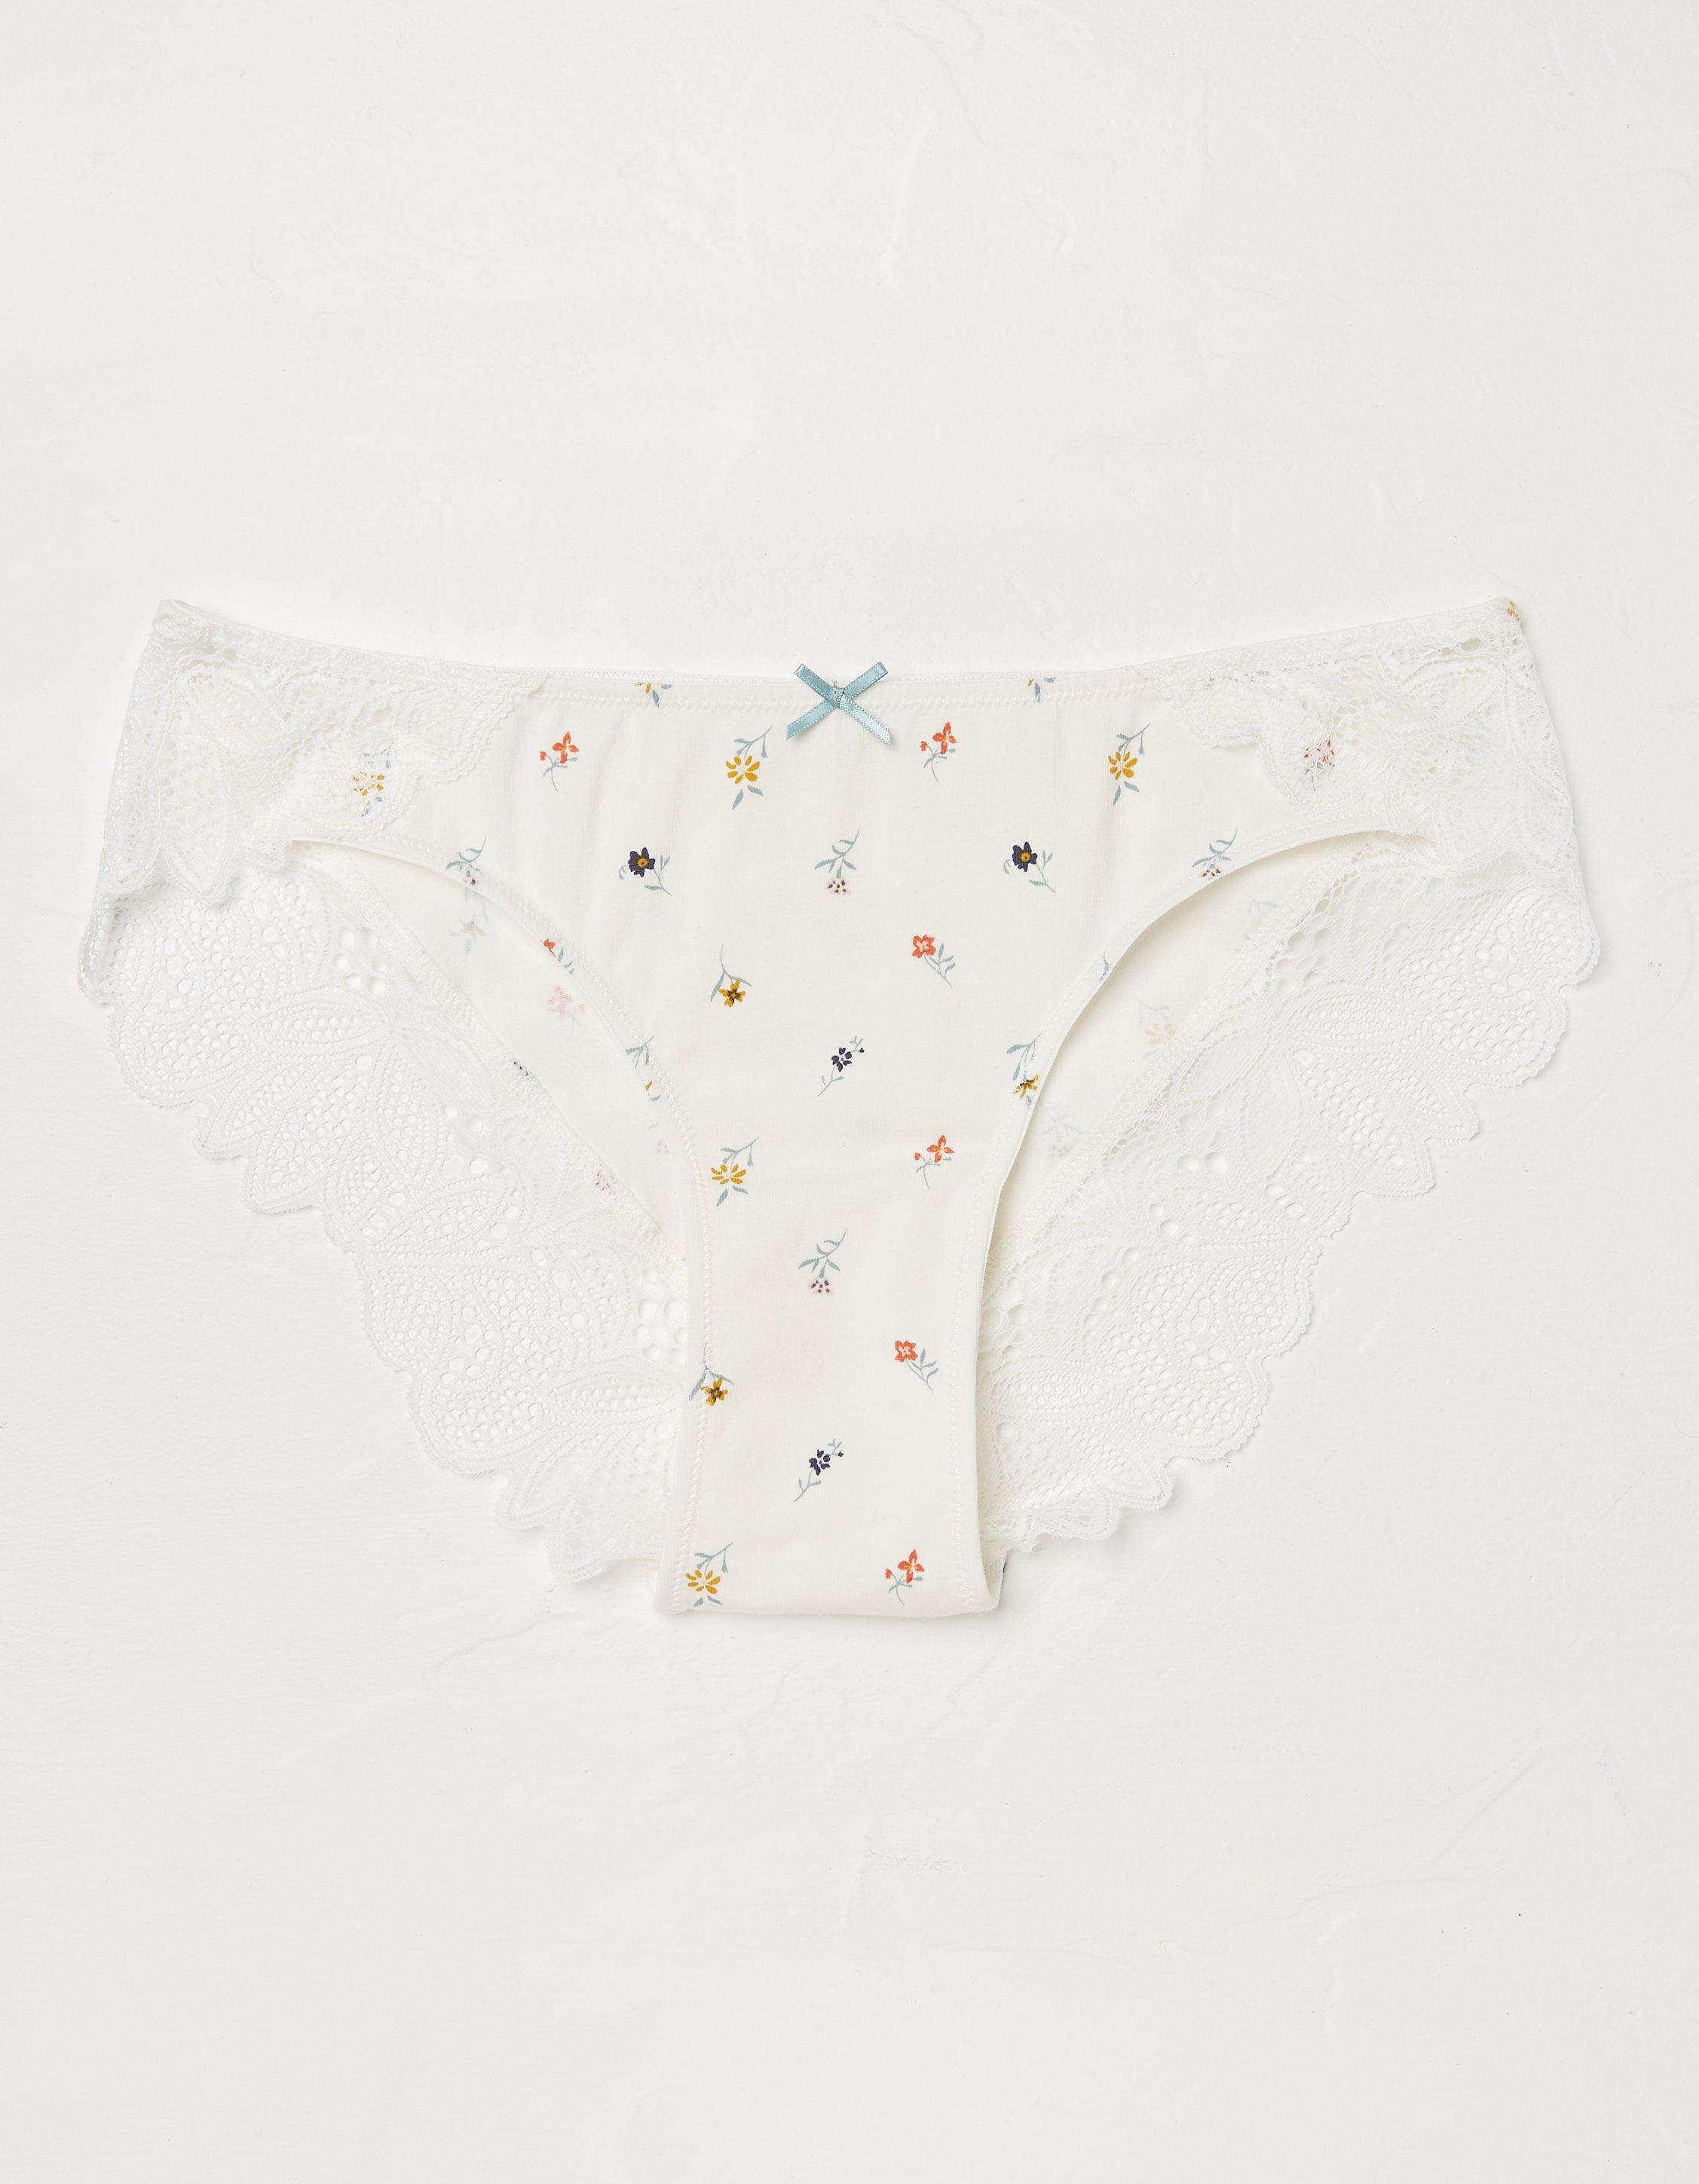 Mia Floral Cheeky Knickers, Socks, Underwear & Tights